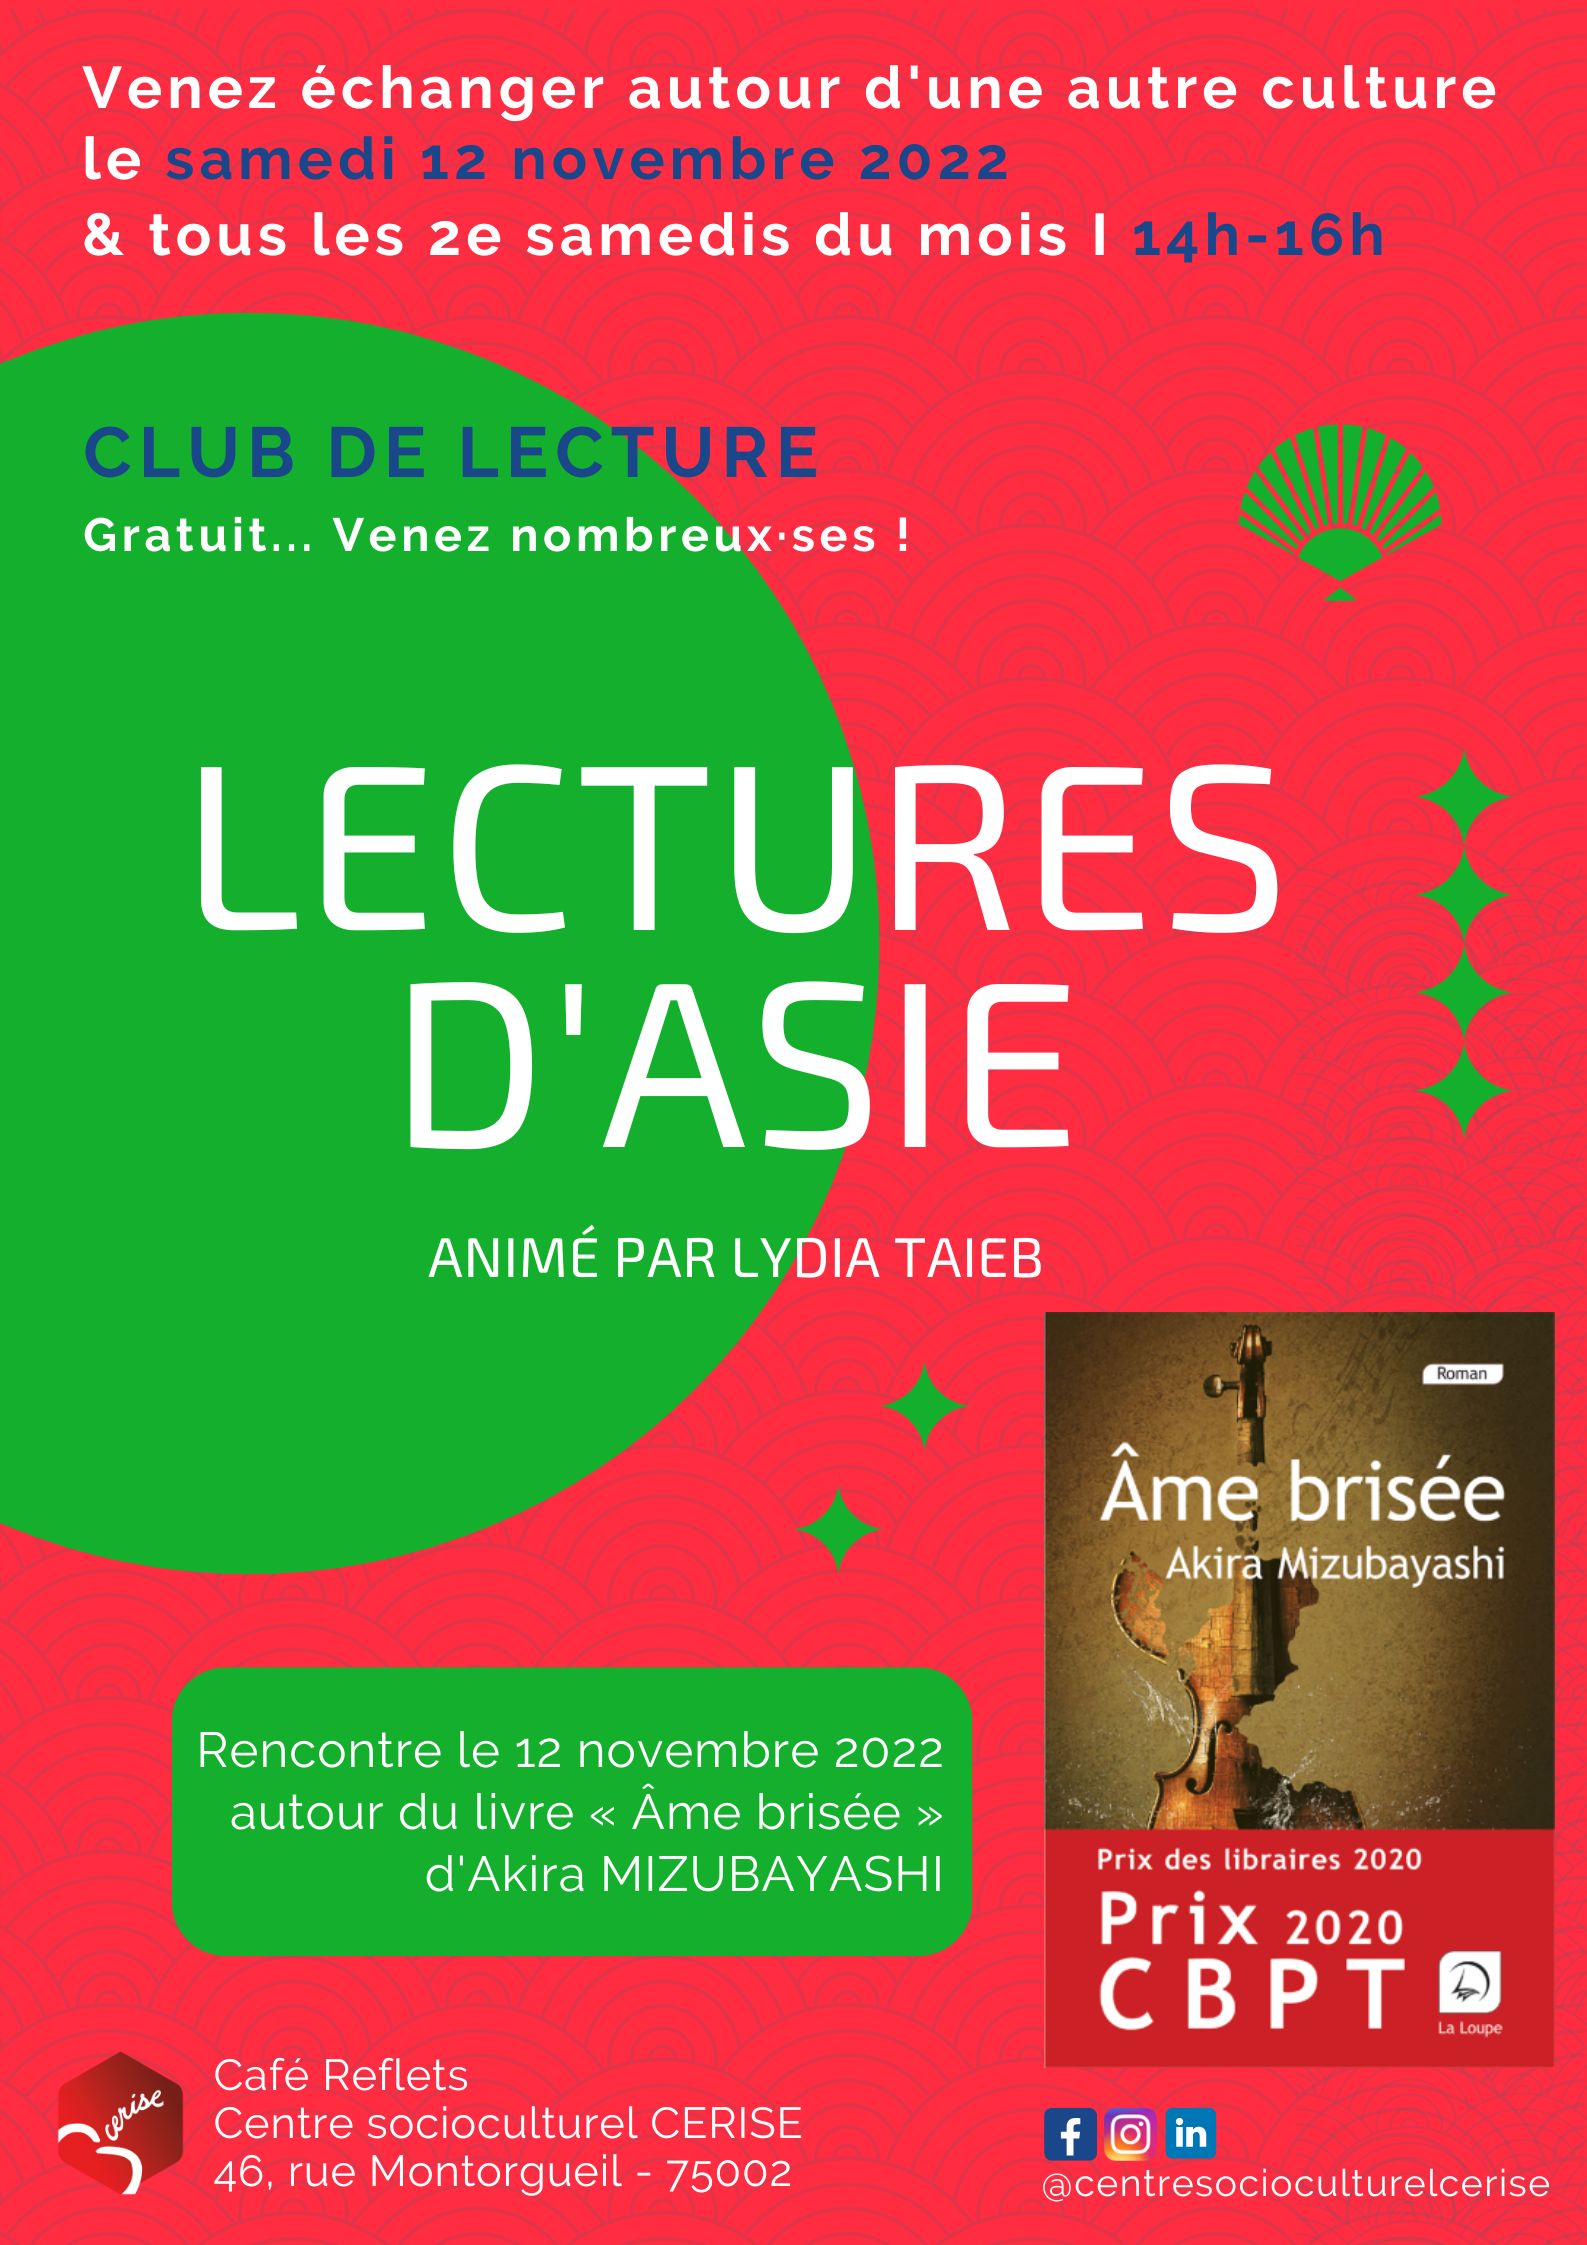 12 novembre - Club de lecture - Centre socioculturel CERISE.jpg